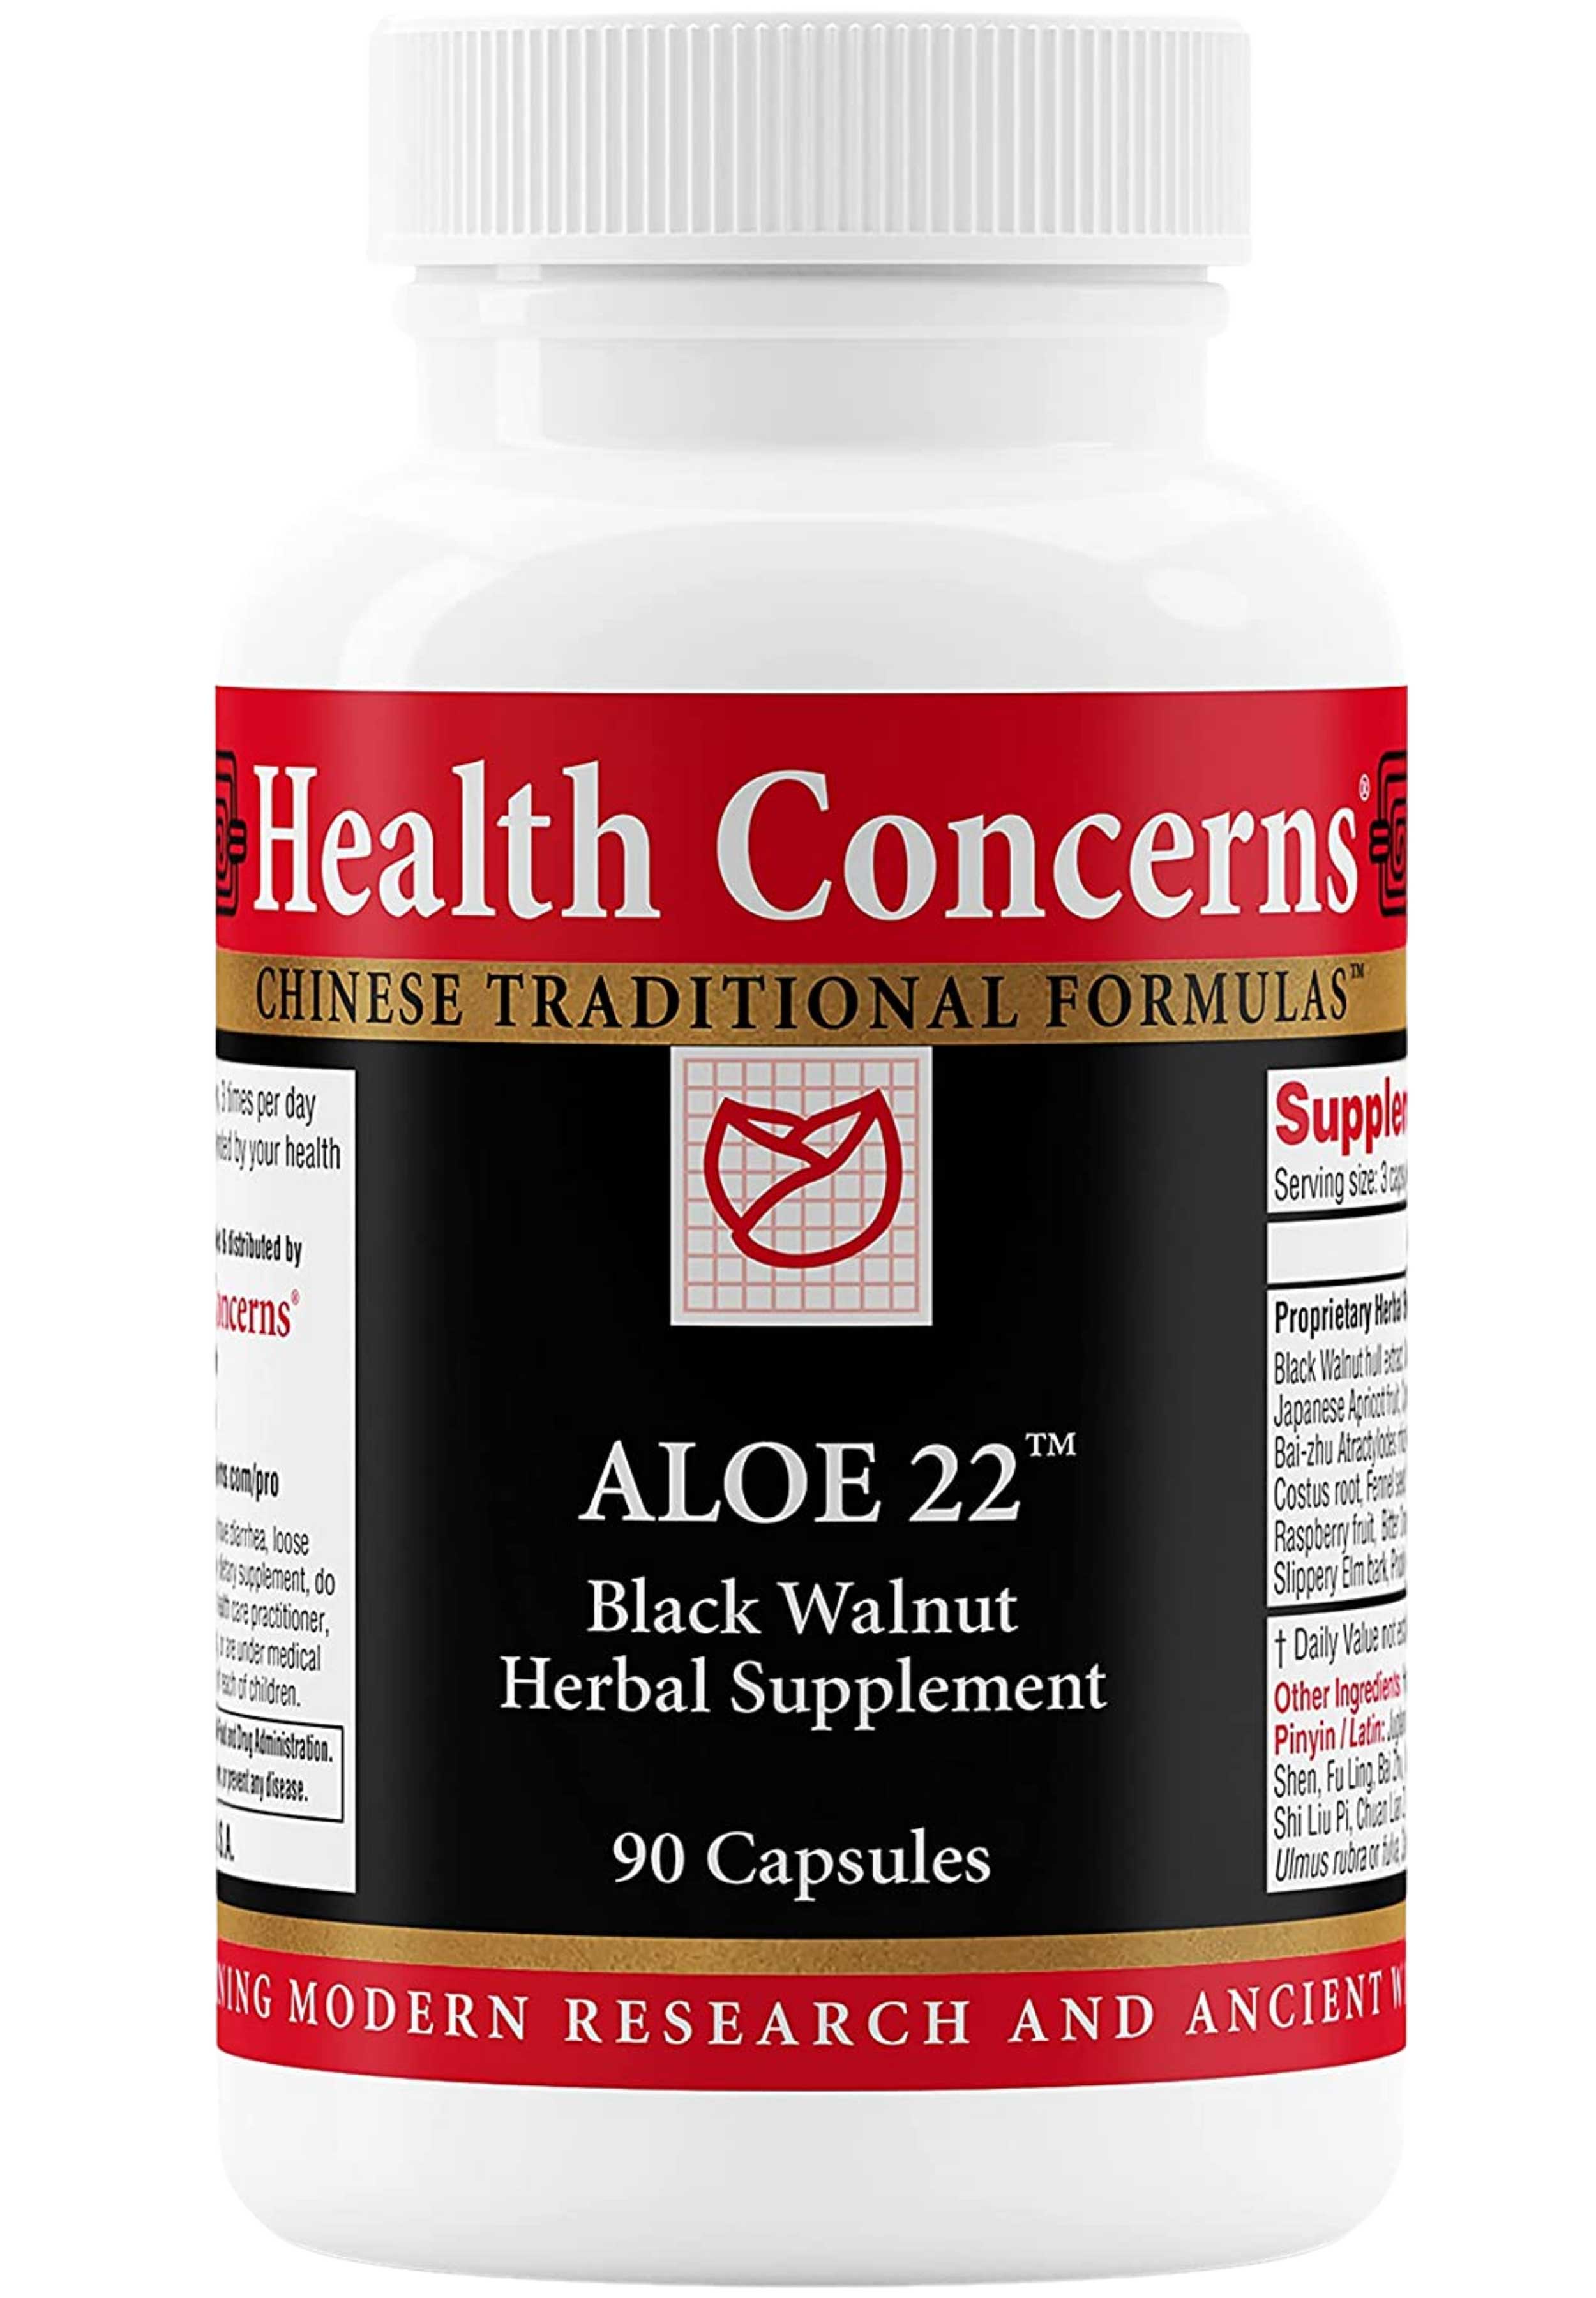 Health Concerns Aloe 22